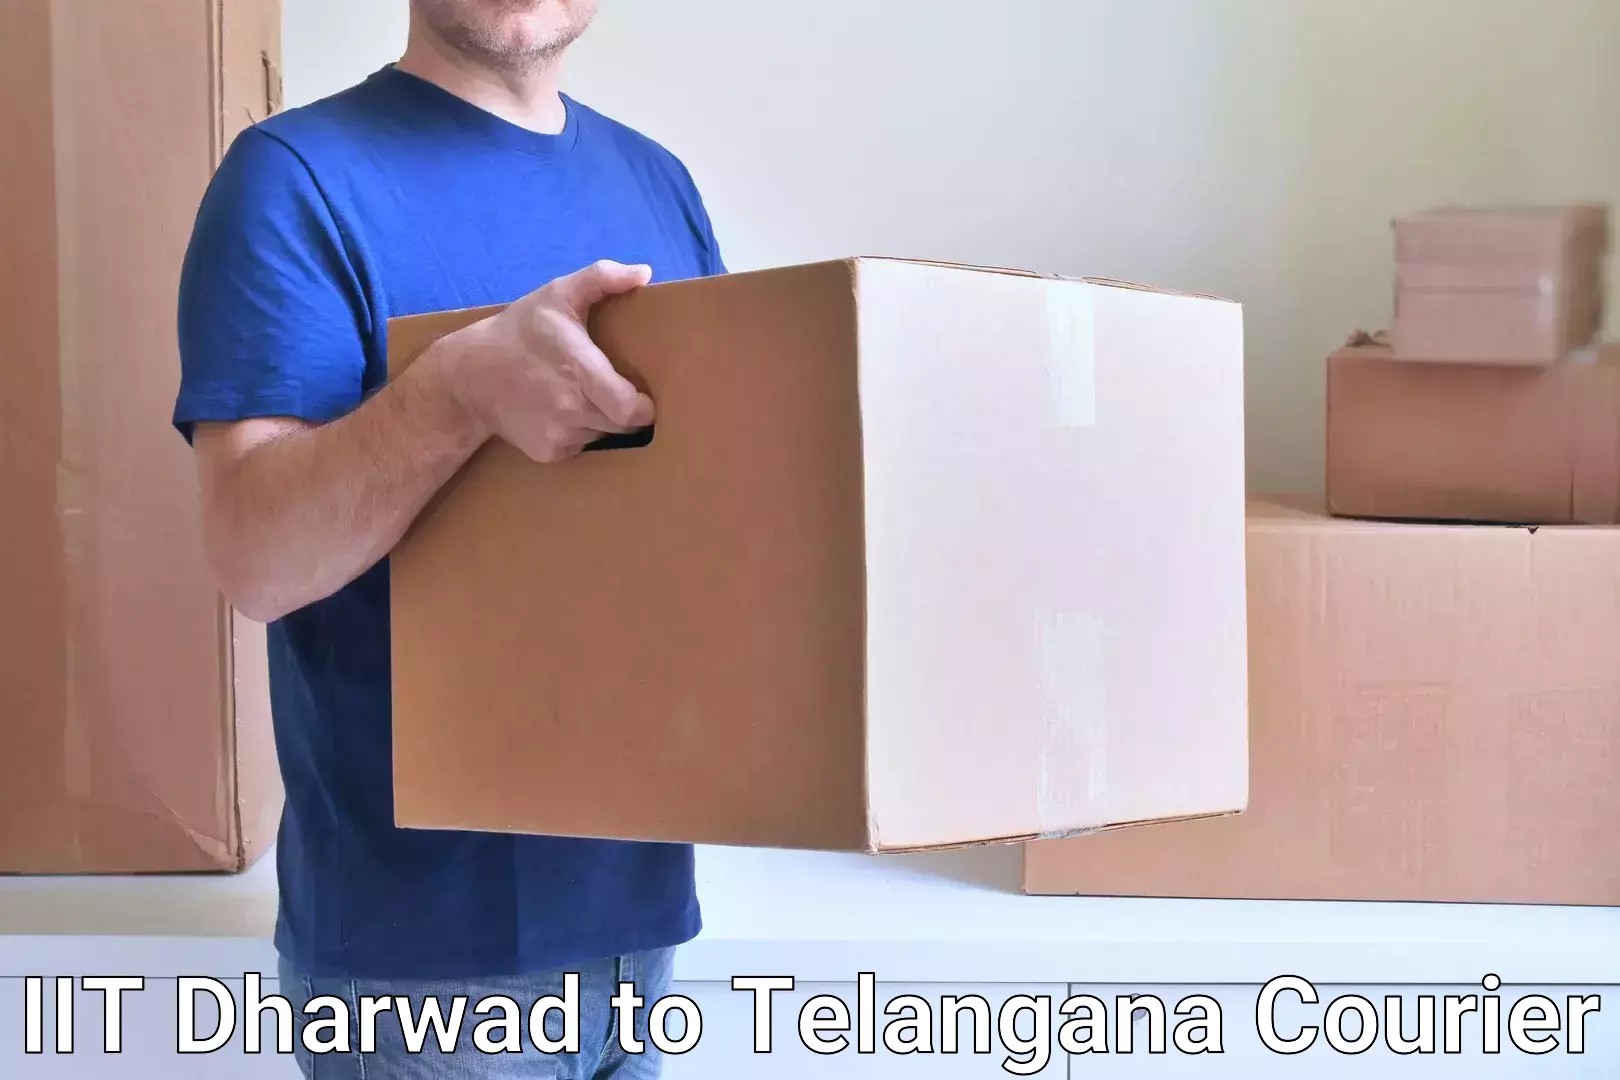 Courier service comparison IIT Dharwad to Tiryani